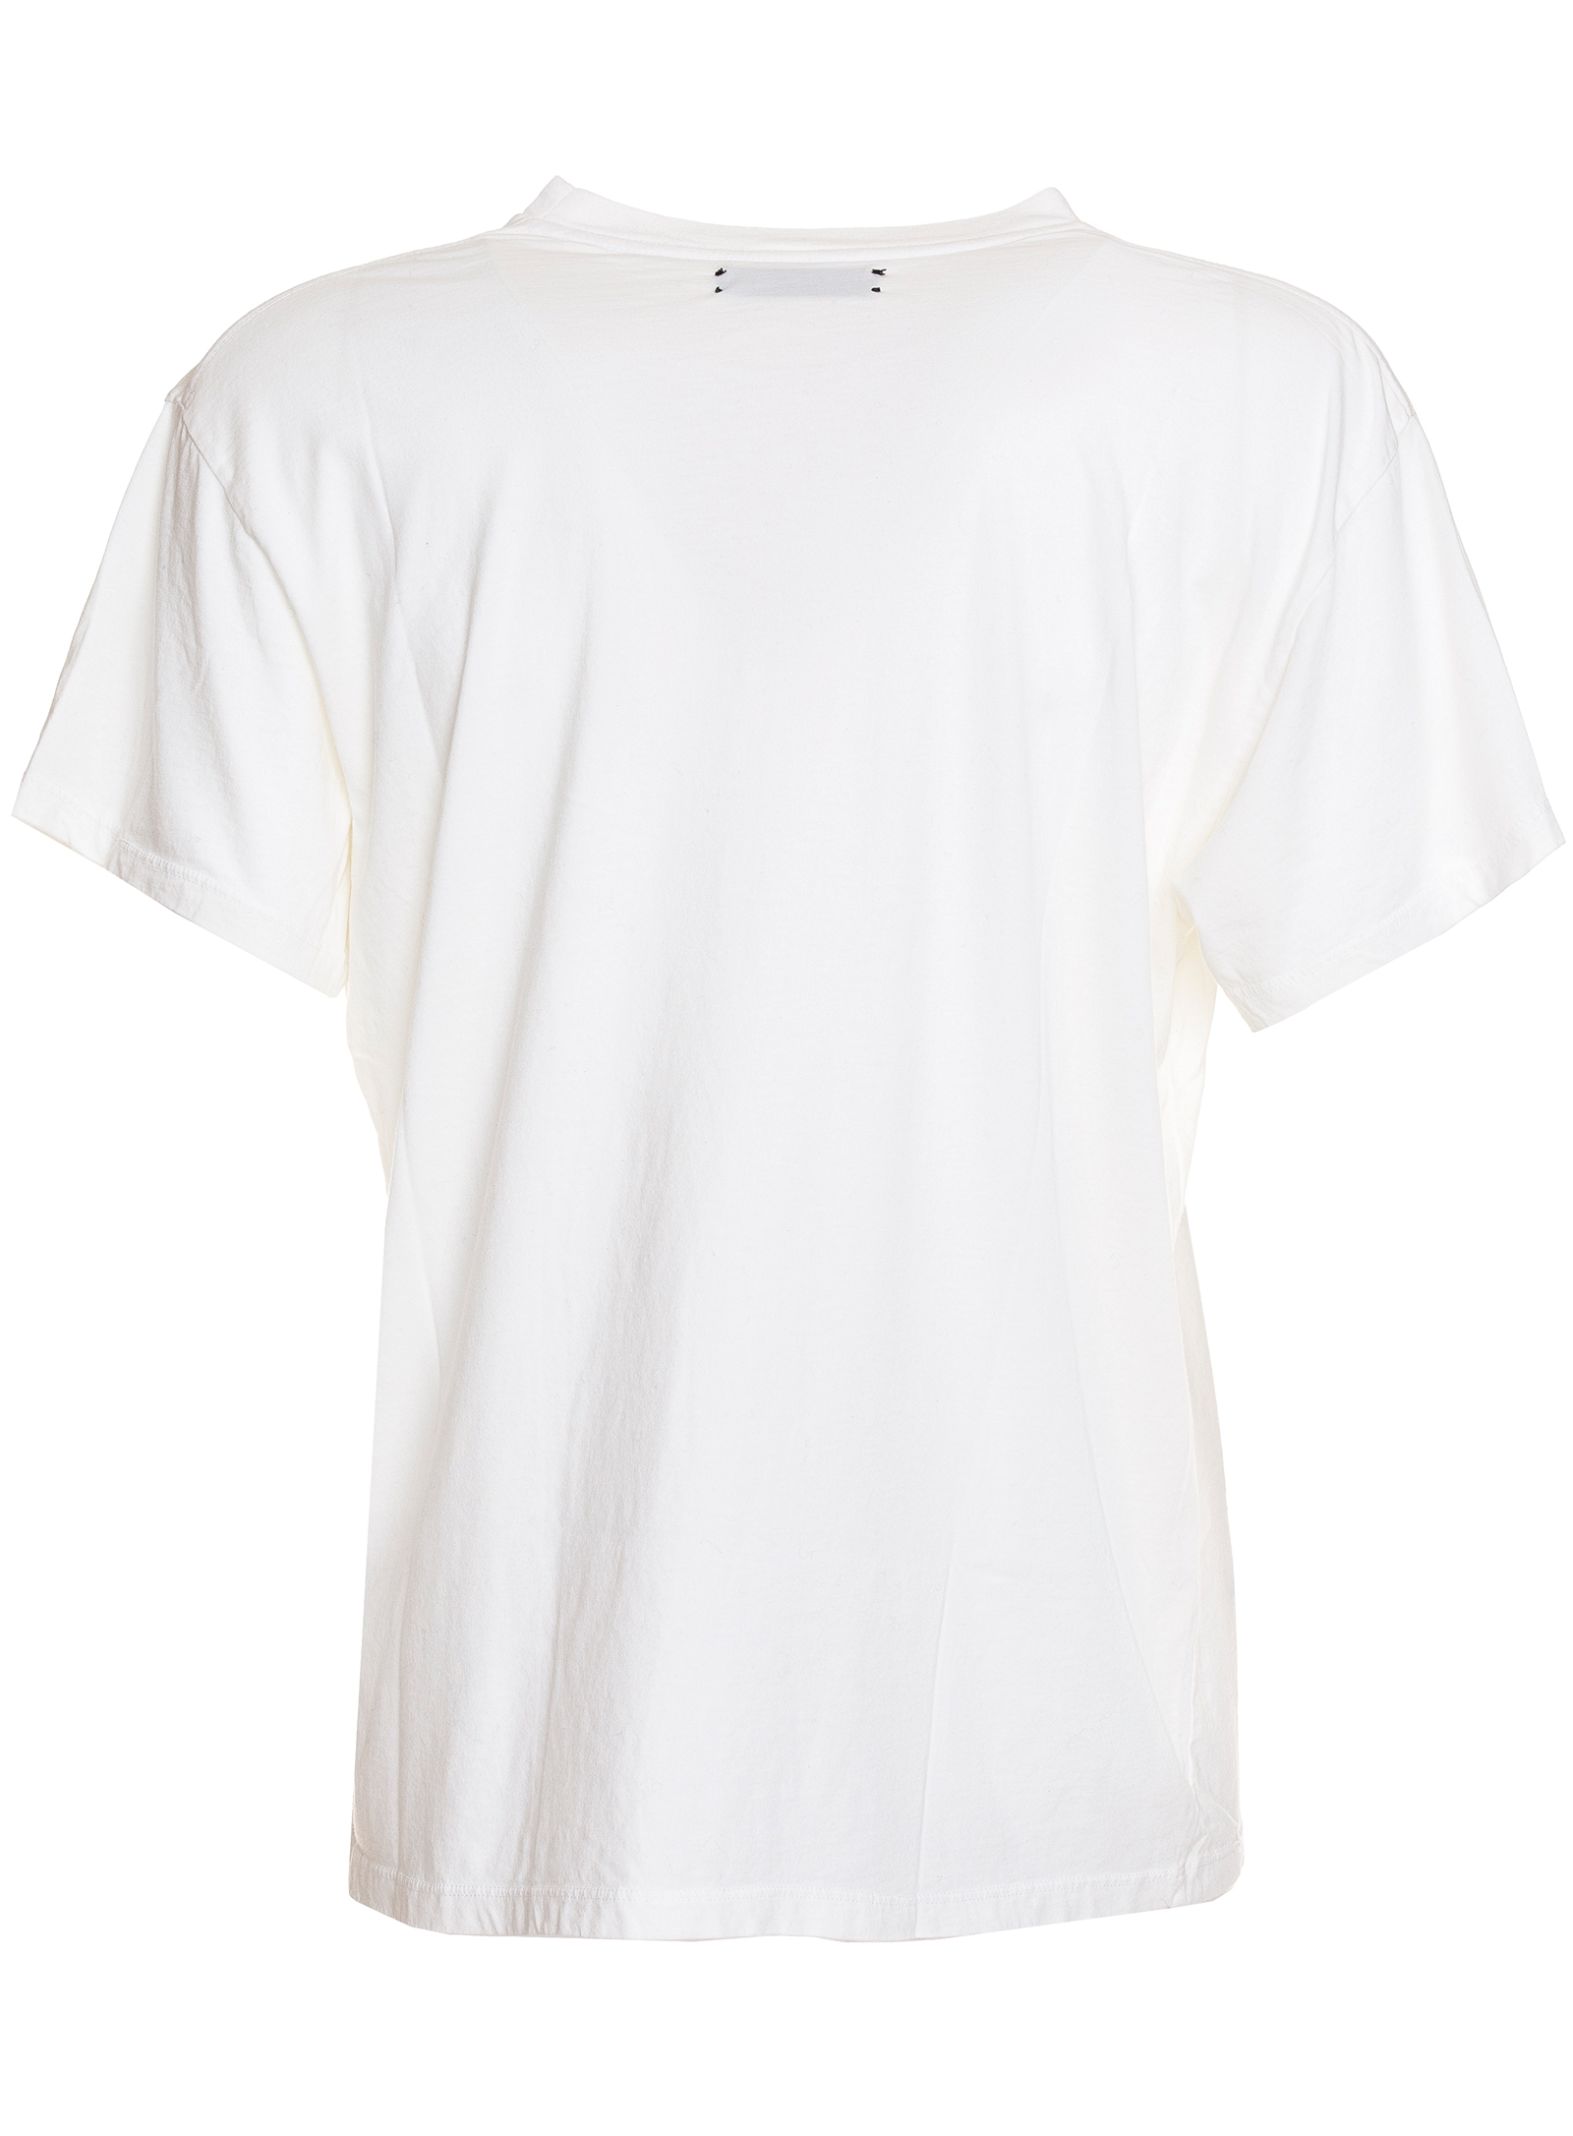 italist | Best price in the market for AMIRI Amiri Lovers Slogan T-shirt - BIANCO - 10706434 ...